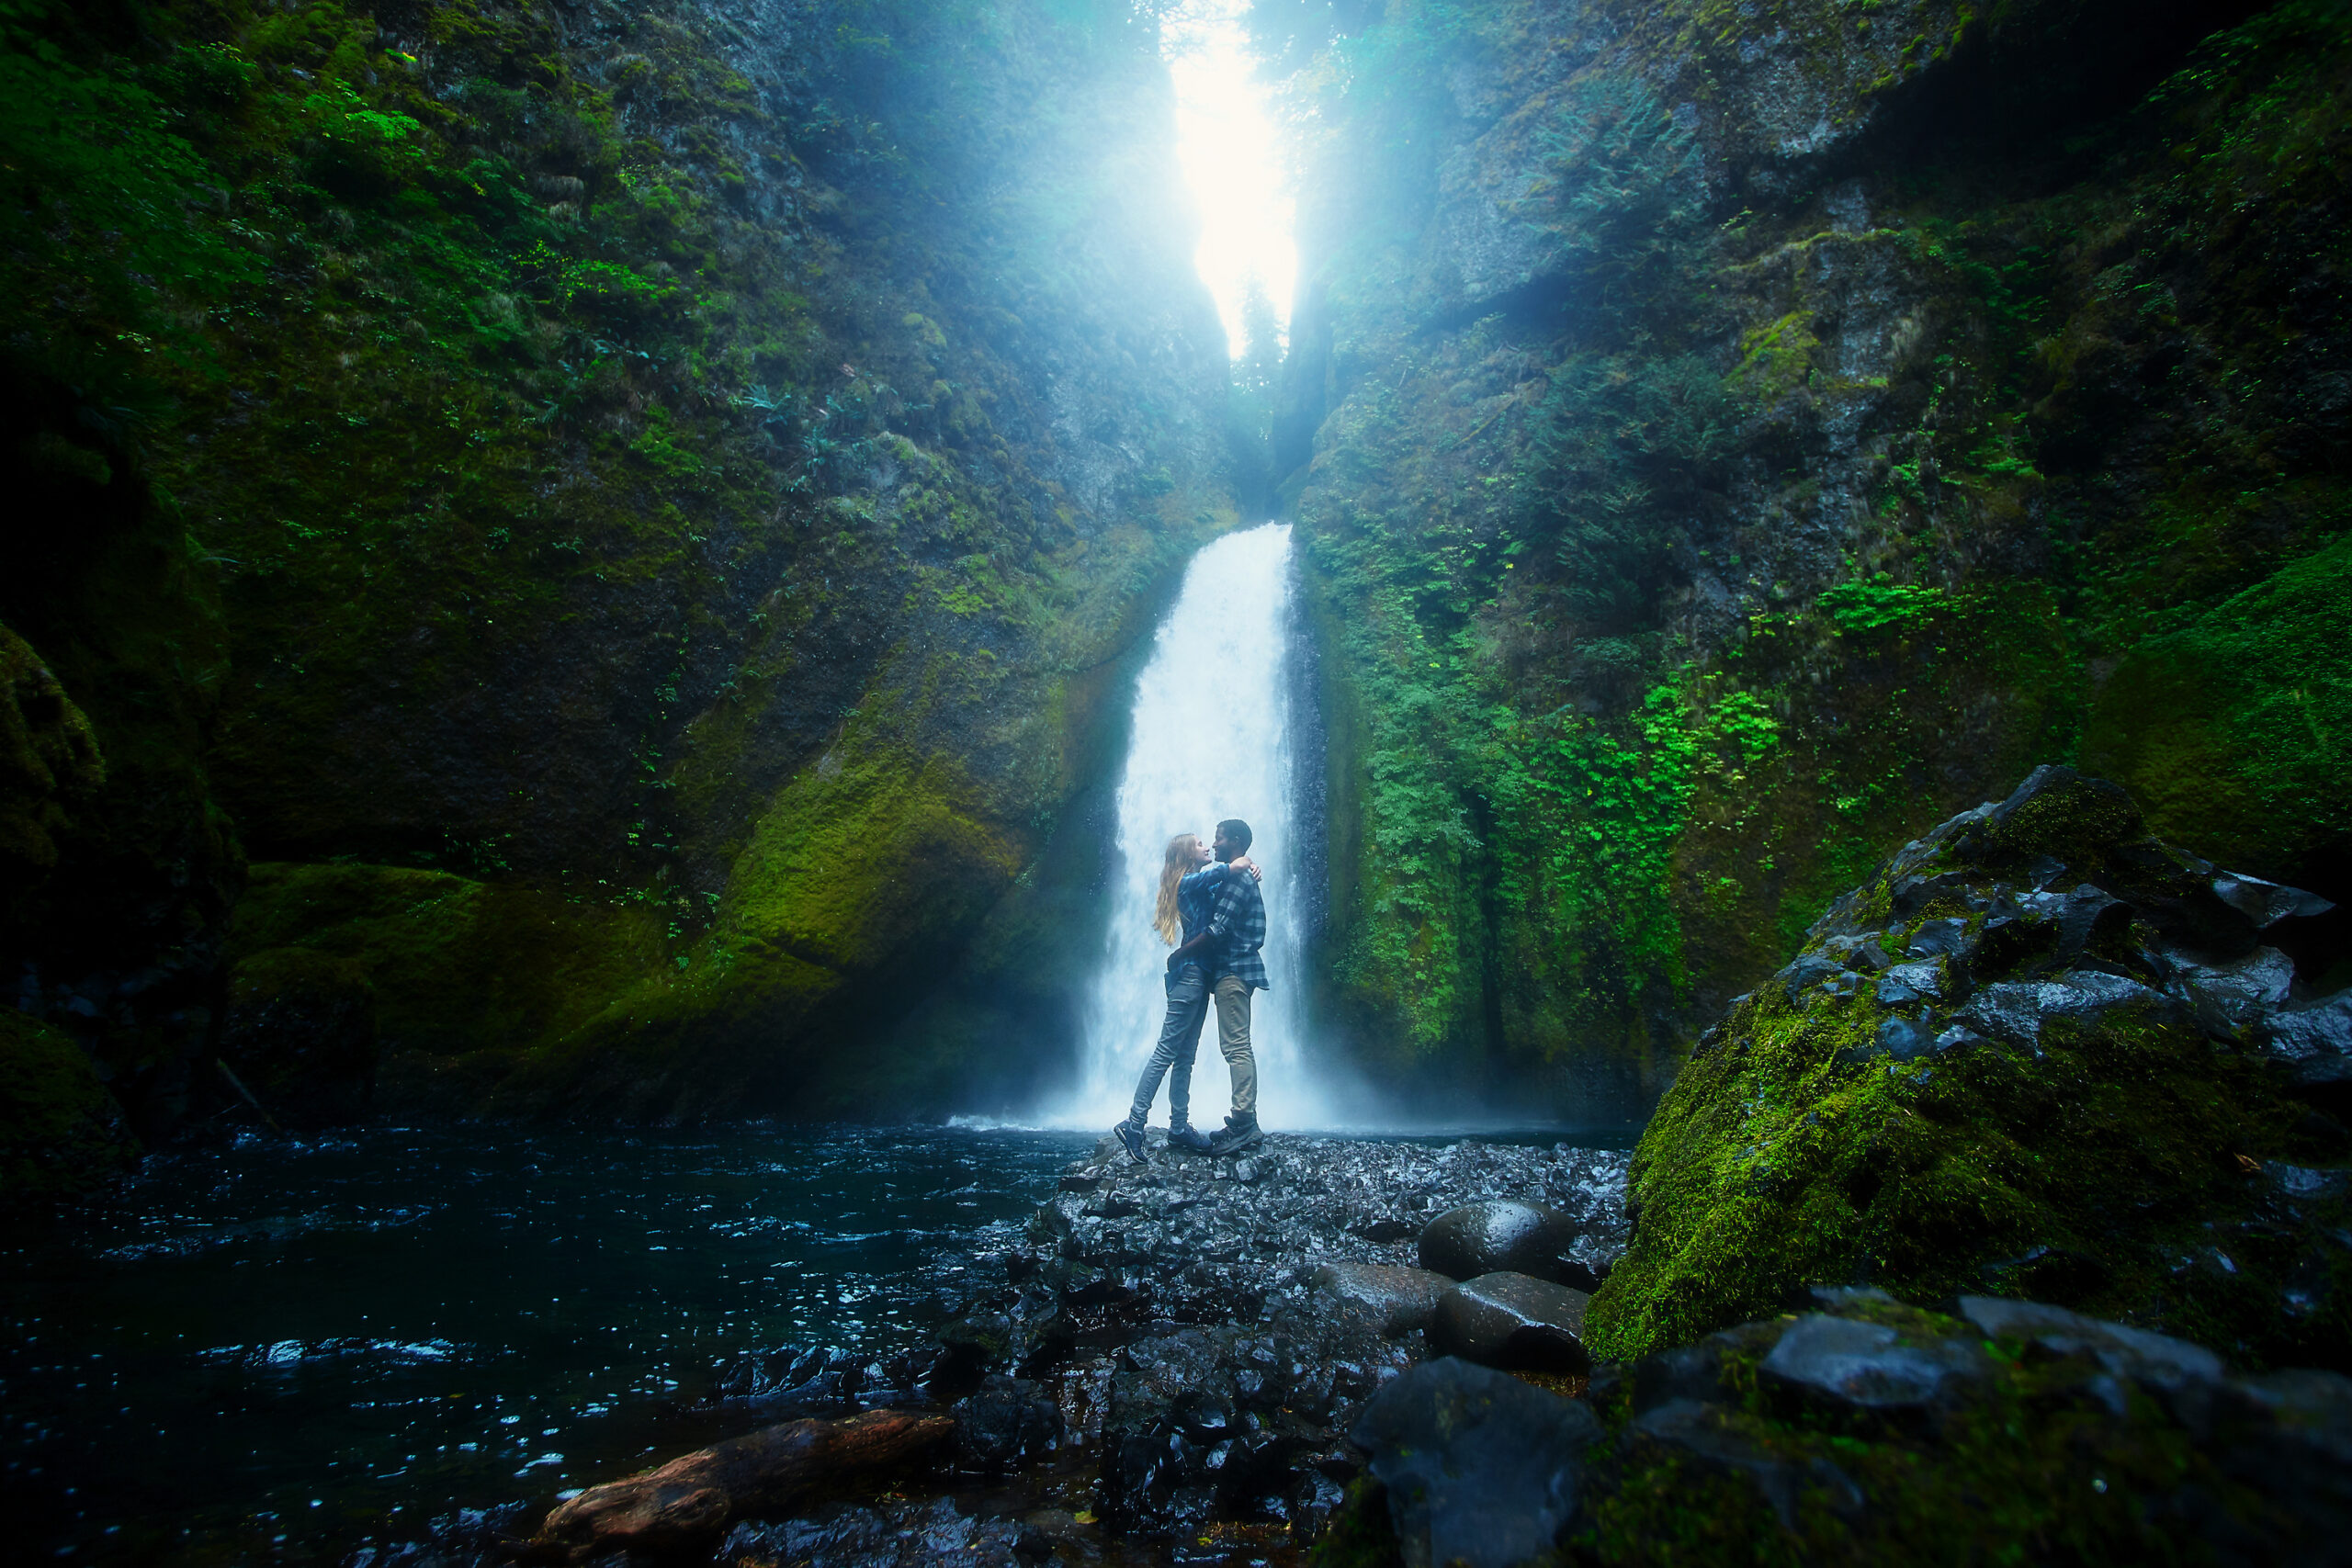 woman and man kissing on edge at wachella falls in Oregon